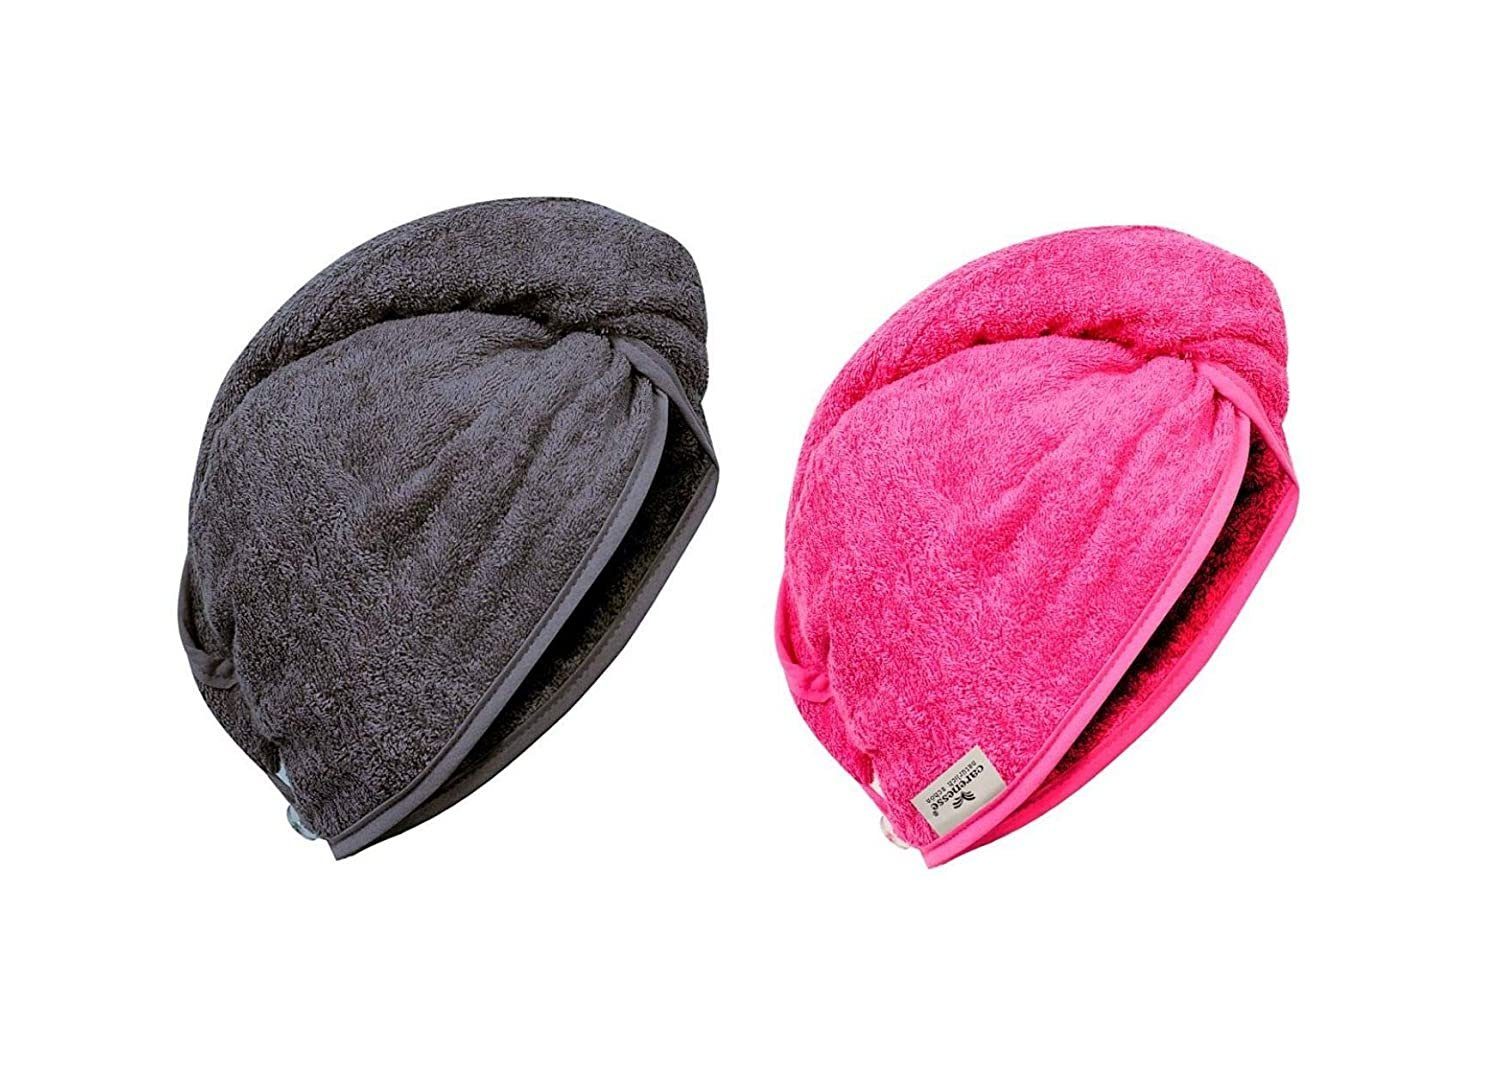 Haarturban Hair Turban-Handtuch Schlaufe, Haar-Turban grau, 2x Haare Haarhandtuch Carenesse Handtuch & Knopf Haar Baumwolle pink + aus Towel Turban saugstarker